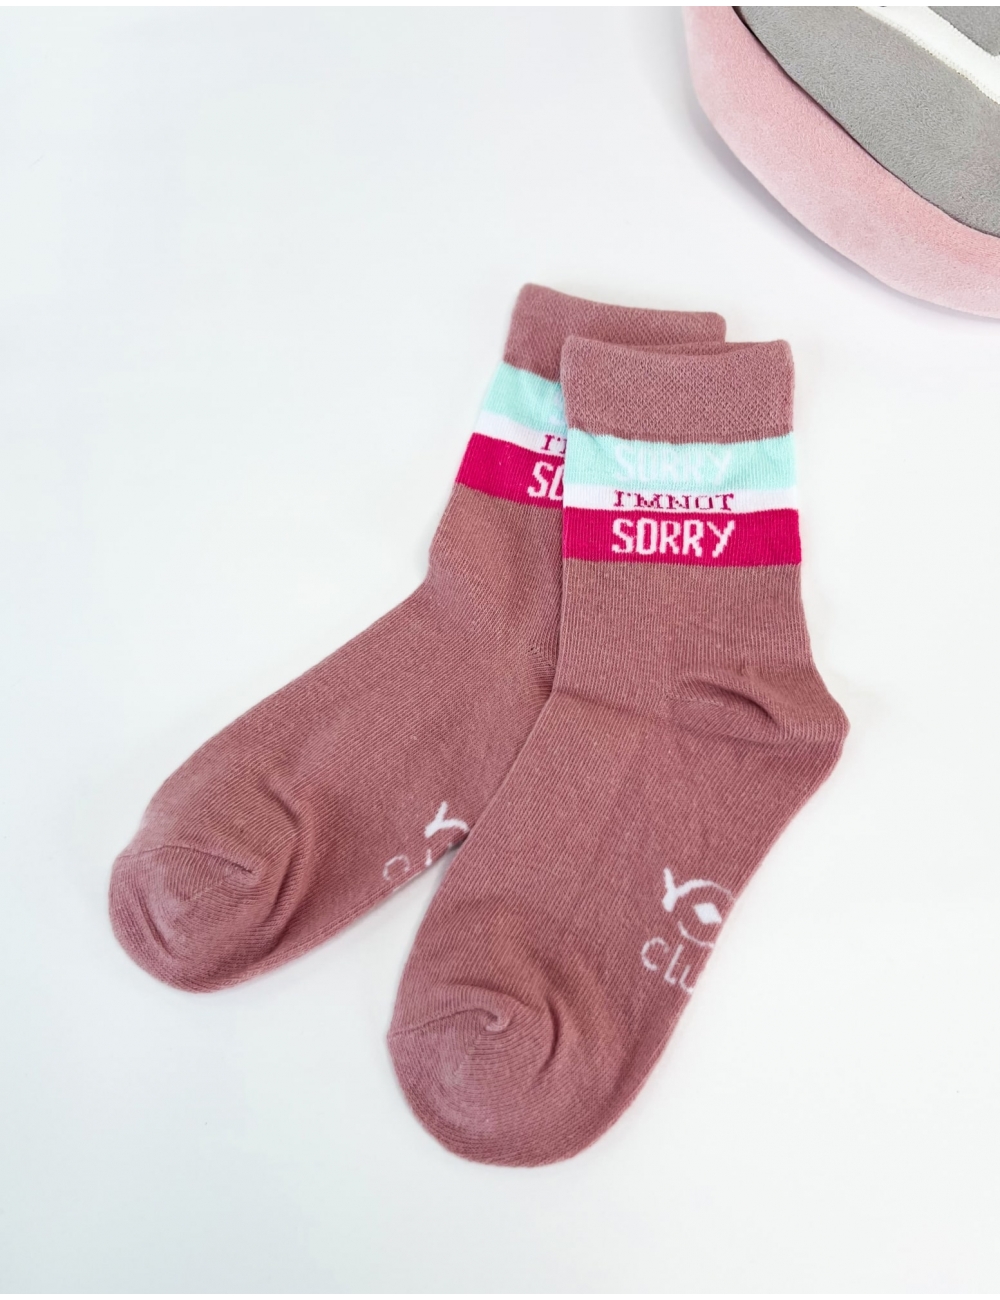 Носки для девочек тм" Yo " Sorry розовые